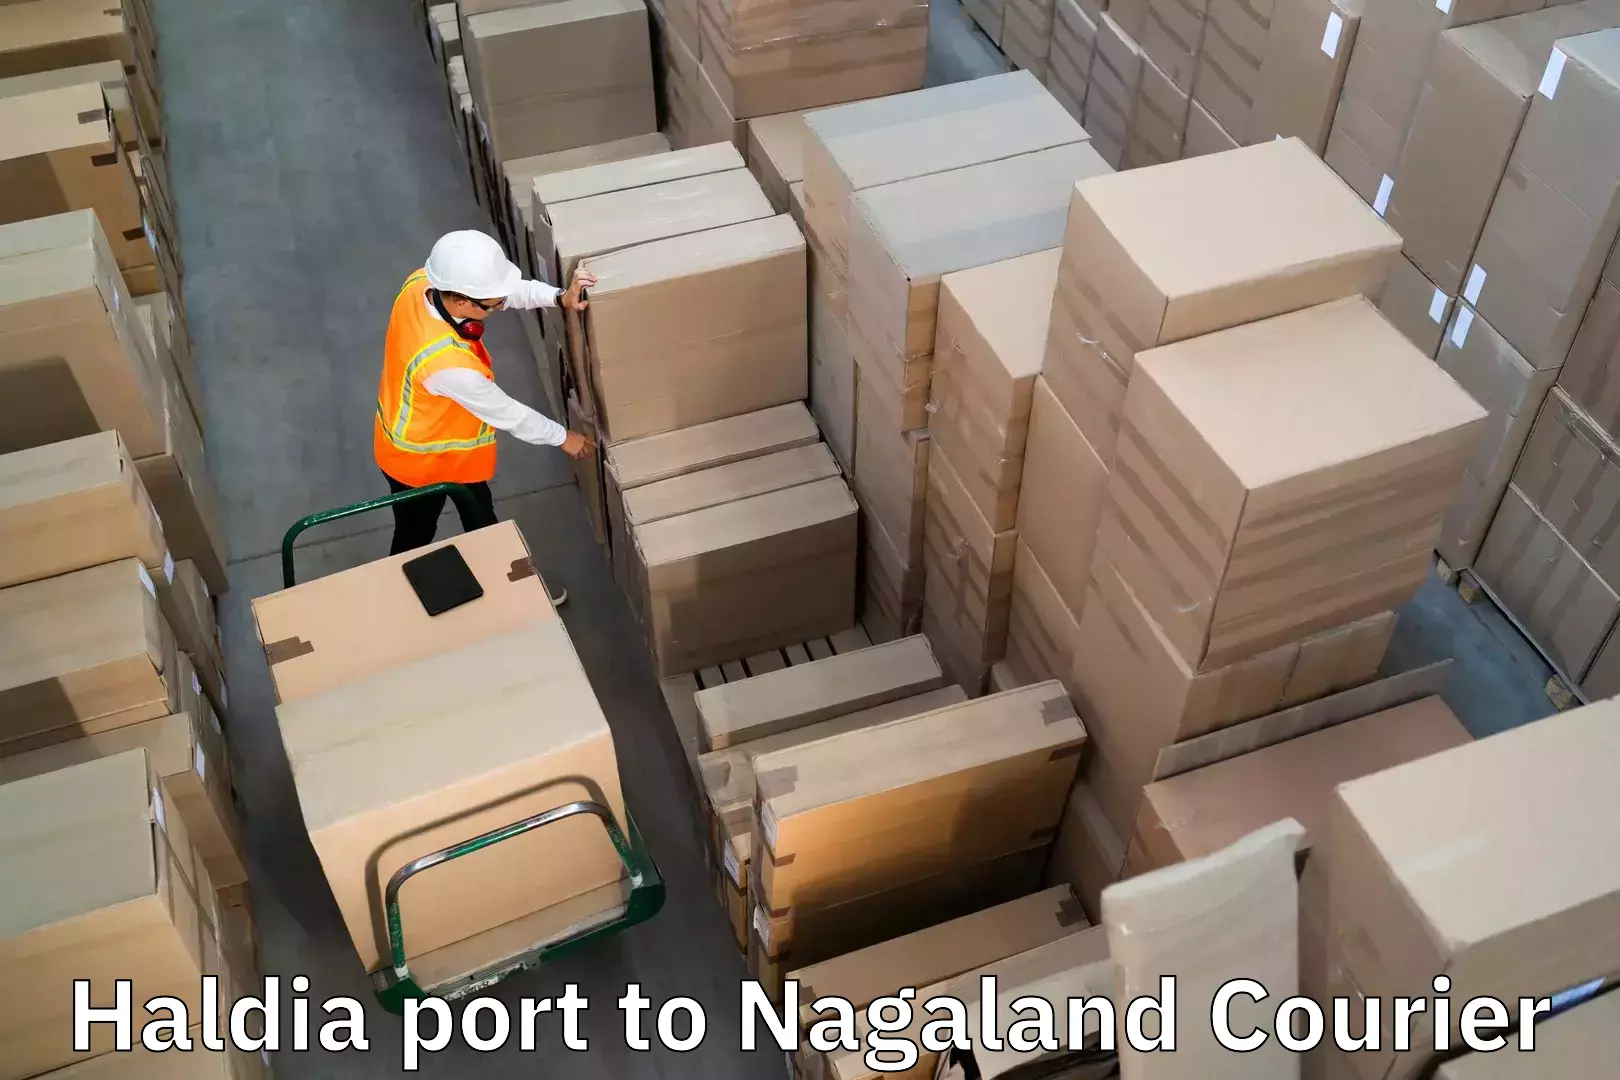 Baggage transport professionals Haldia port to Mon